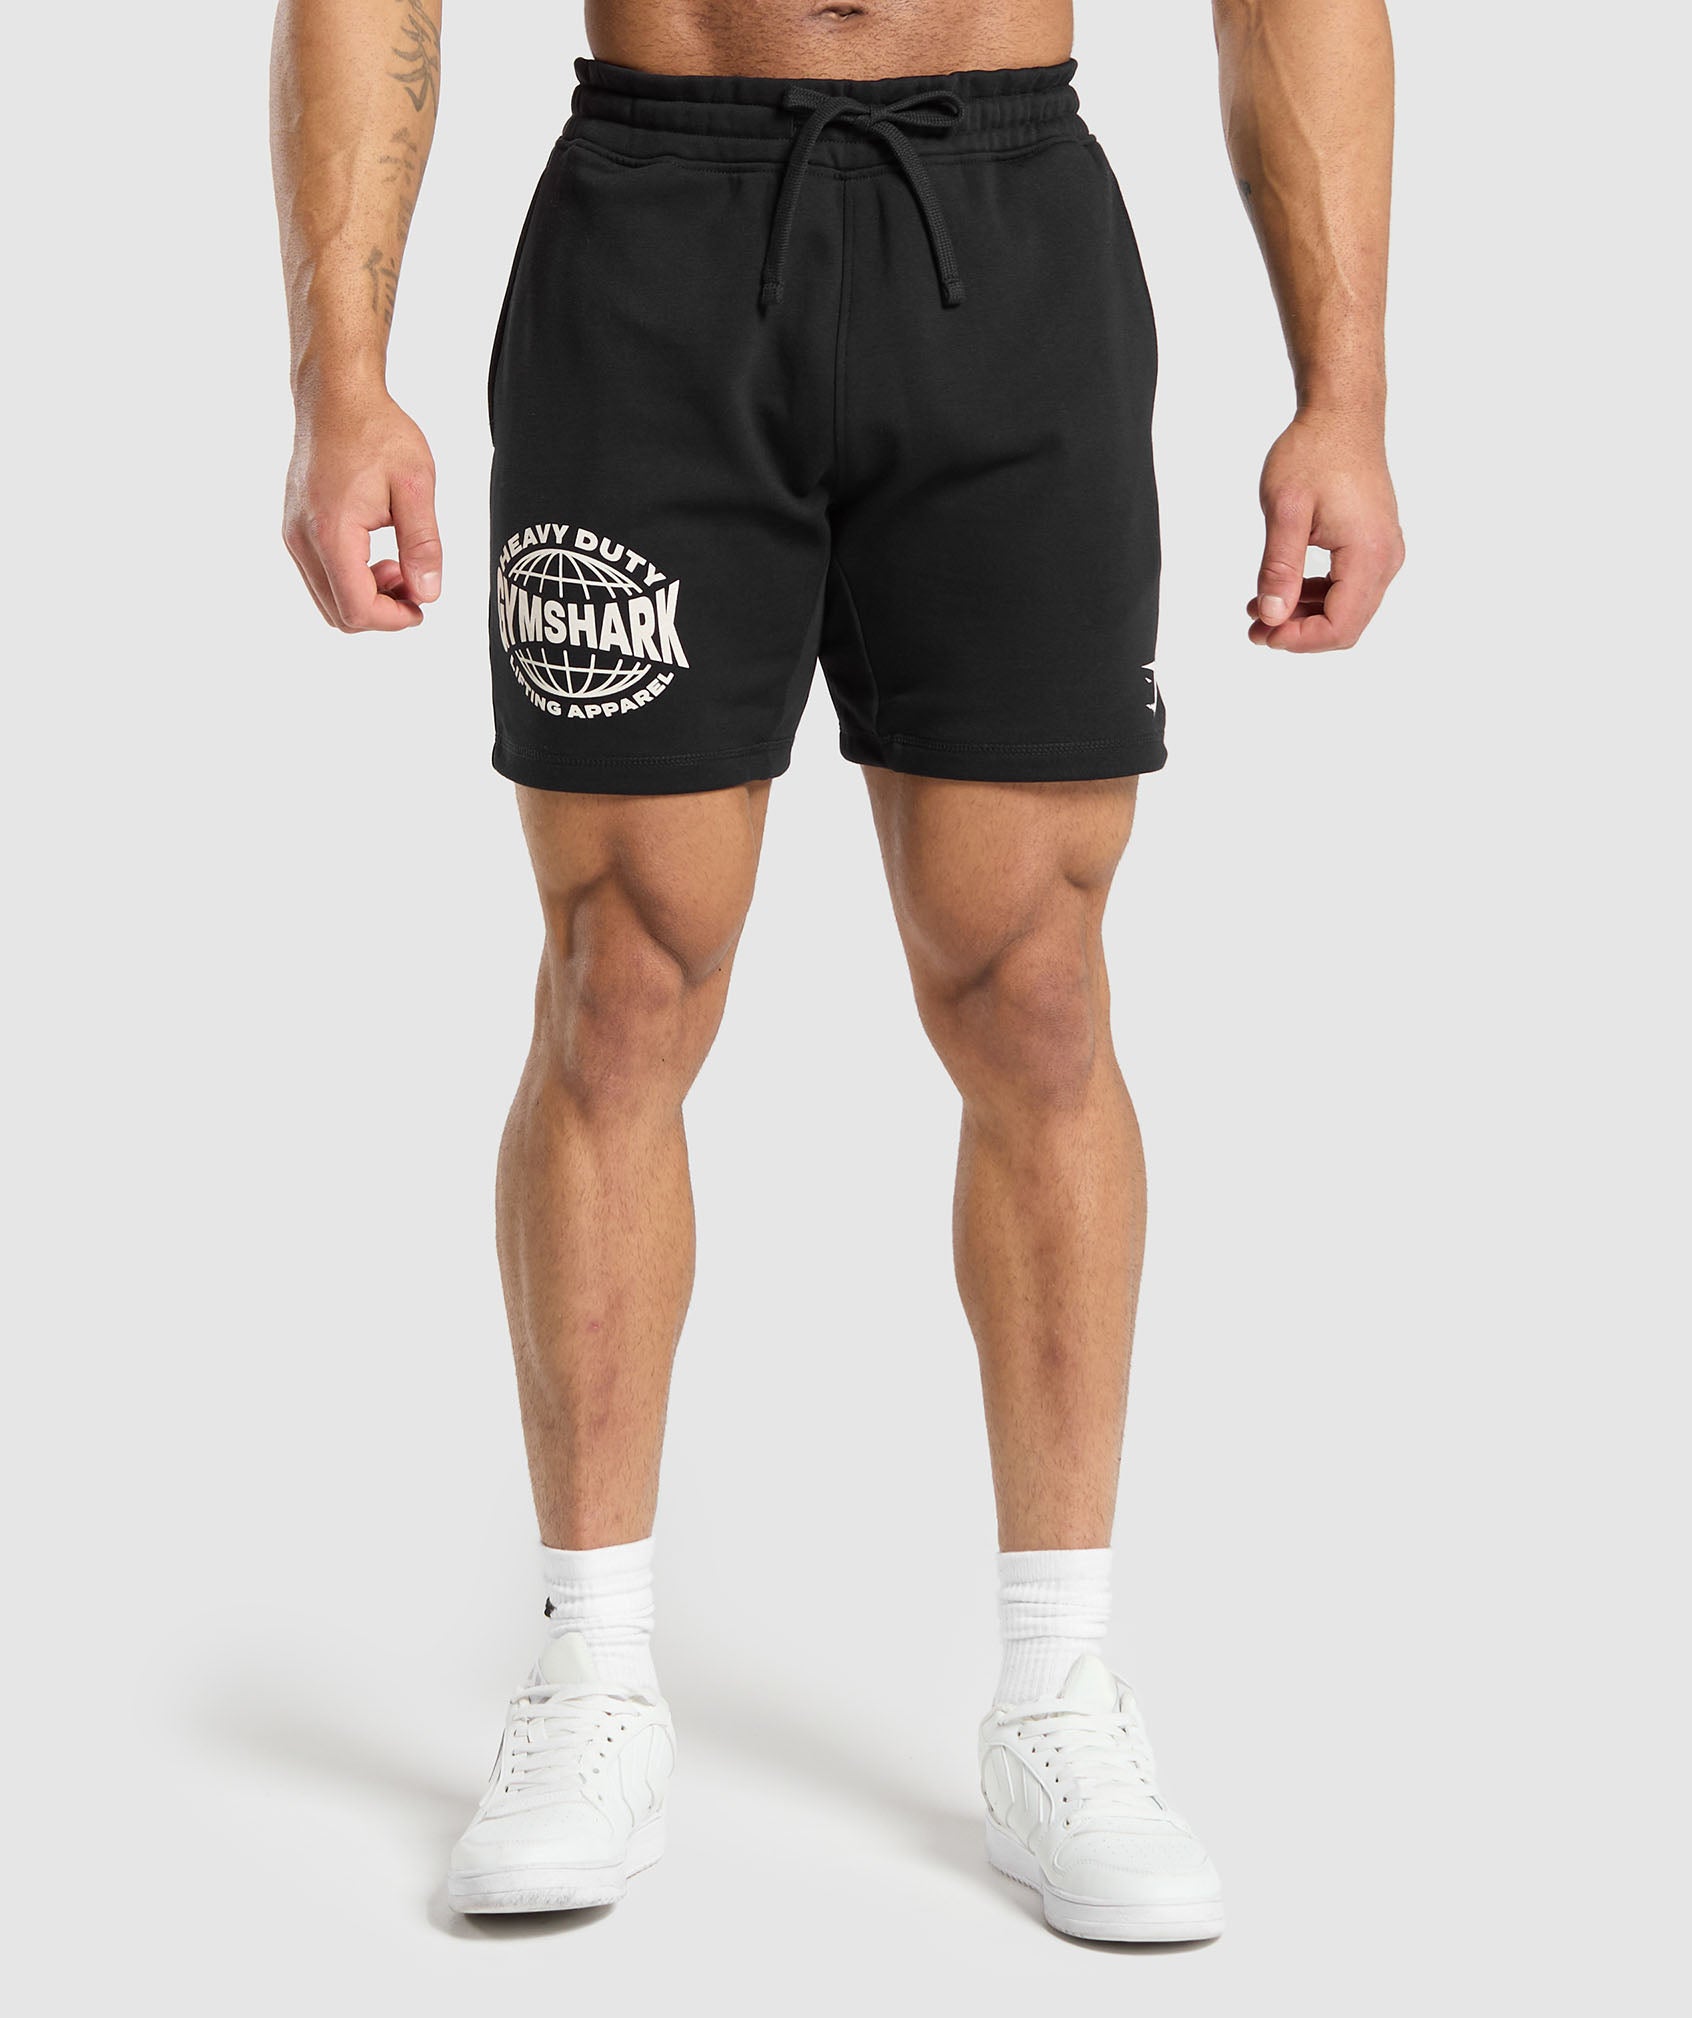 Heavy Duty Apparel 7" Shorts in Black